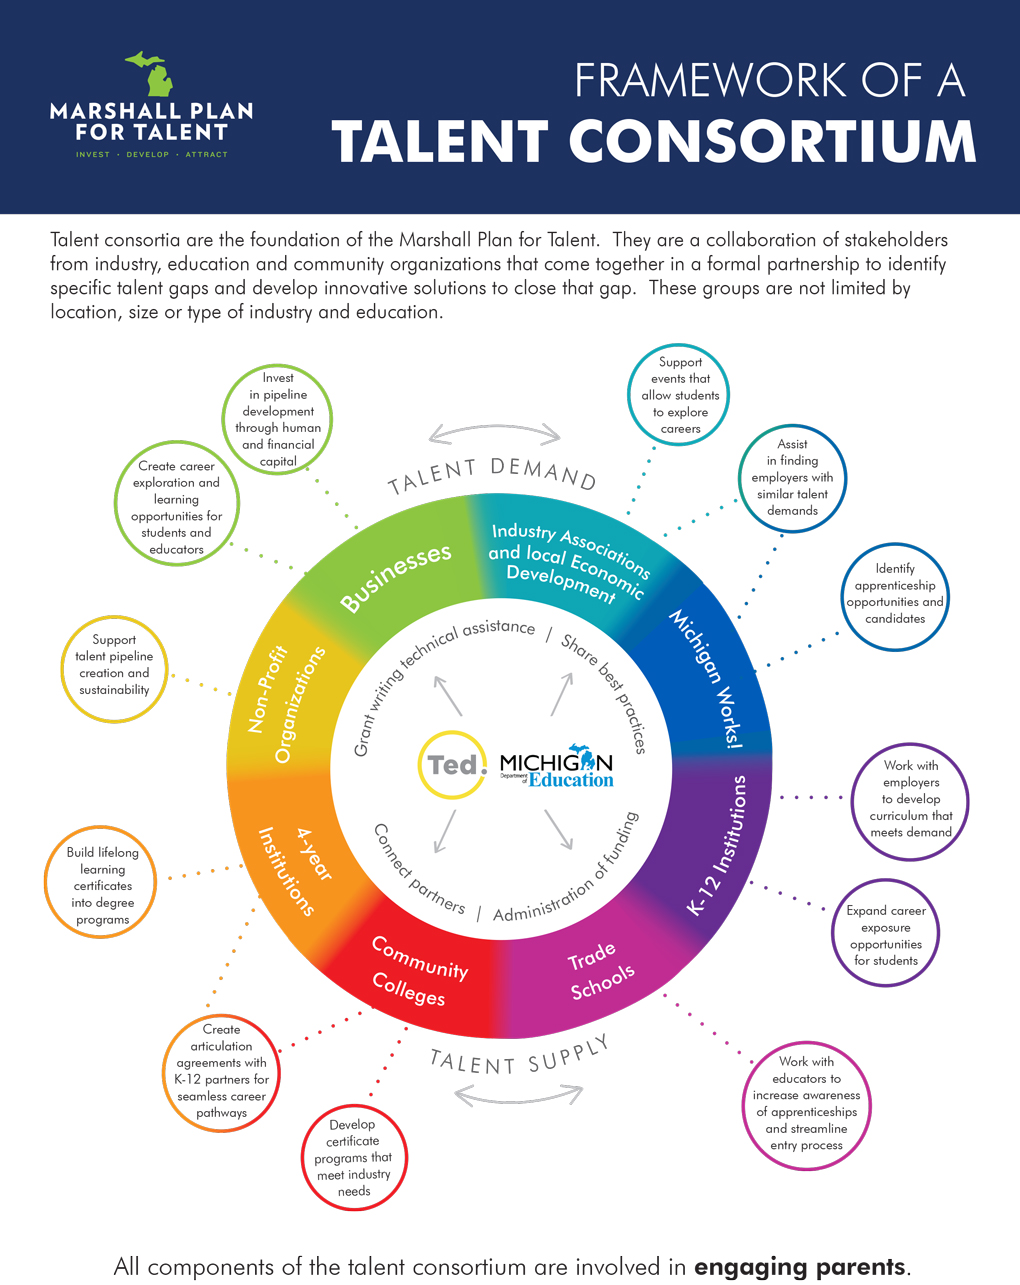 Marshall Plan for Talent Consortium Framework